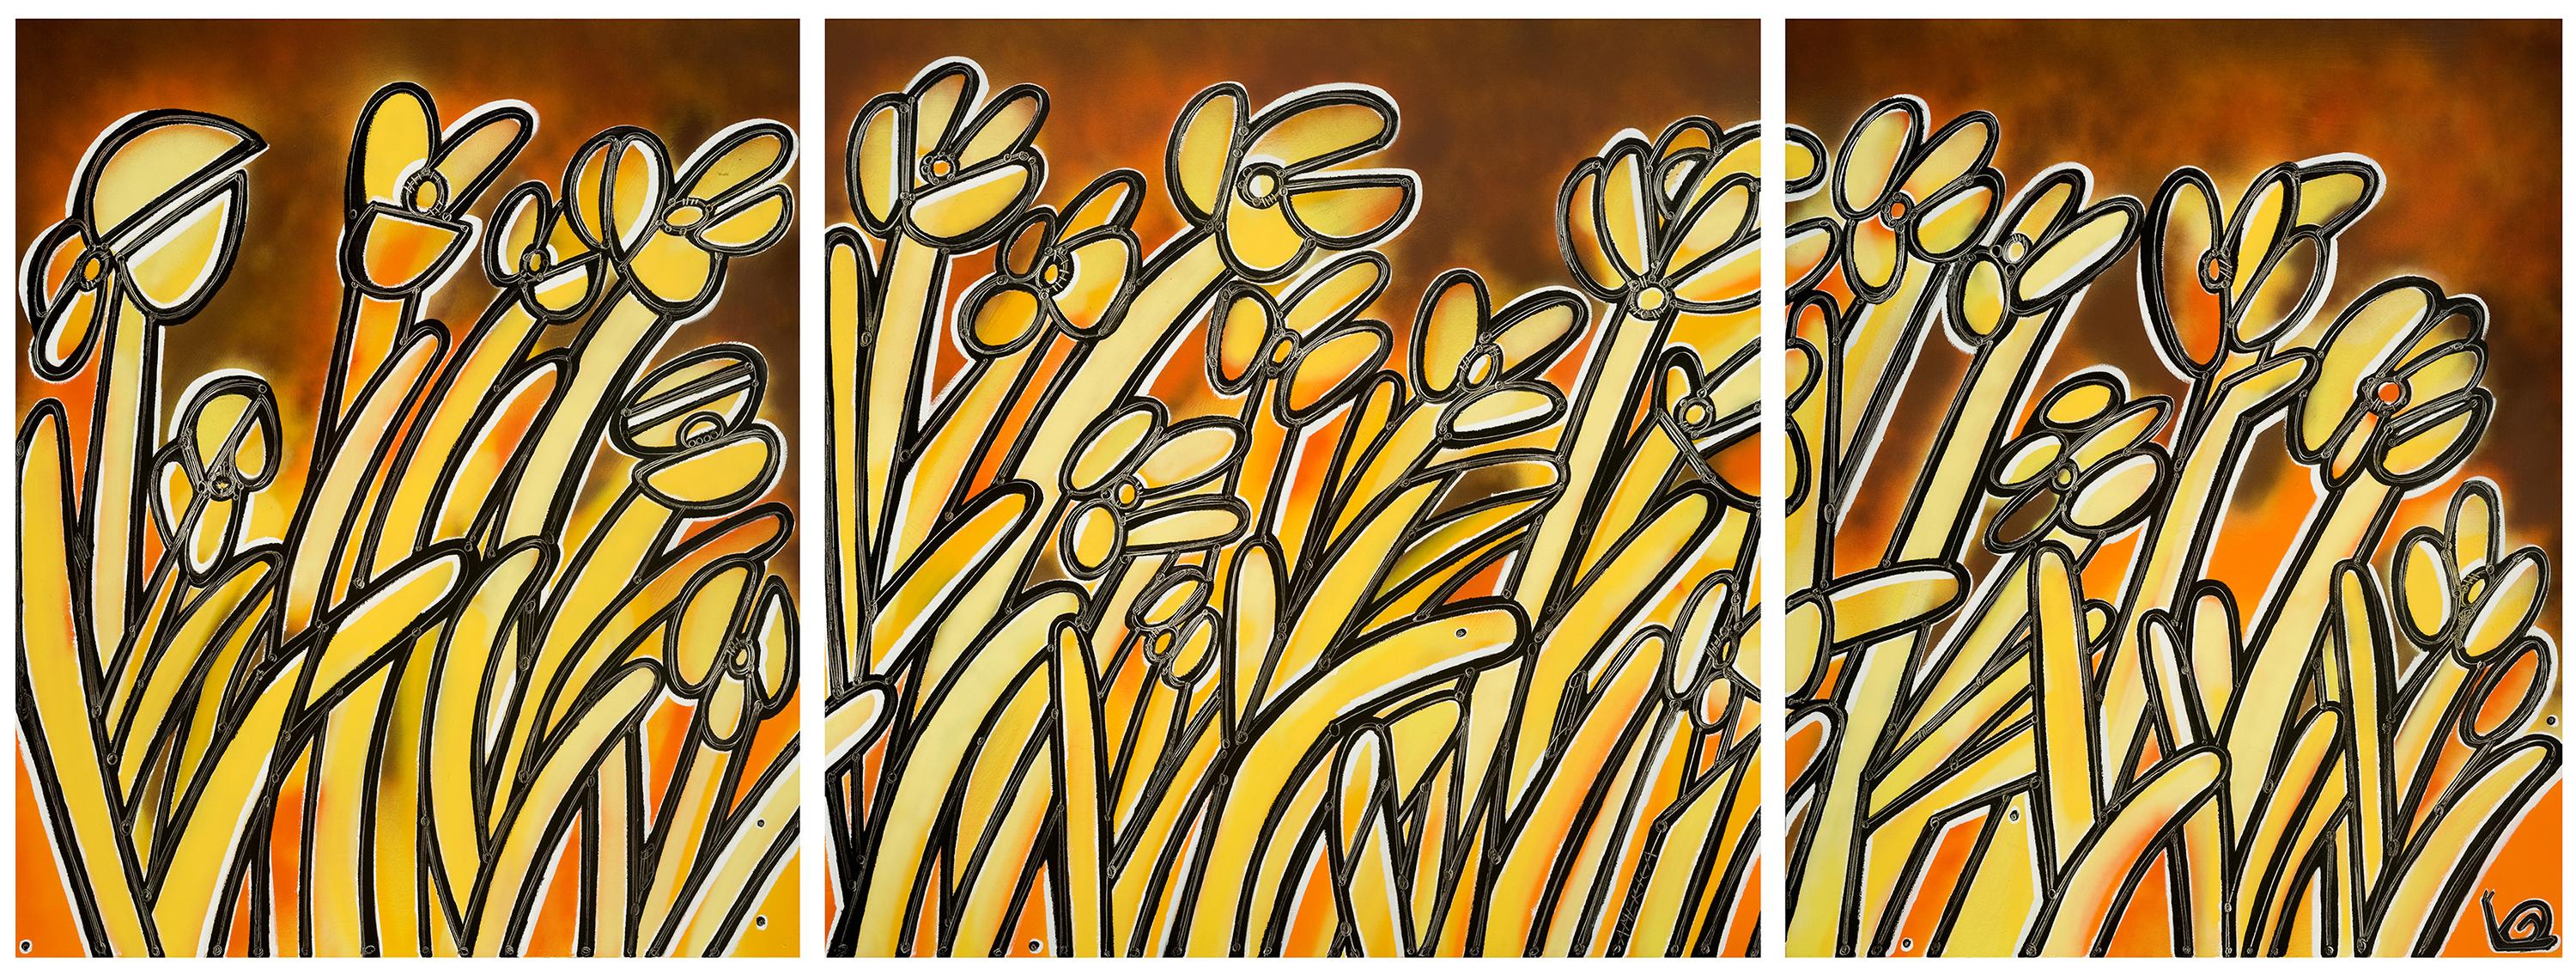 Yellow Flowers, Ode to Wordsworth_Triptych_America Martin_Oil/Acrylic/Spray